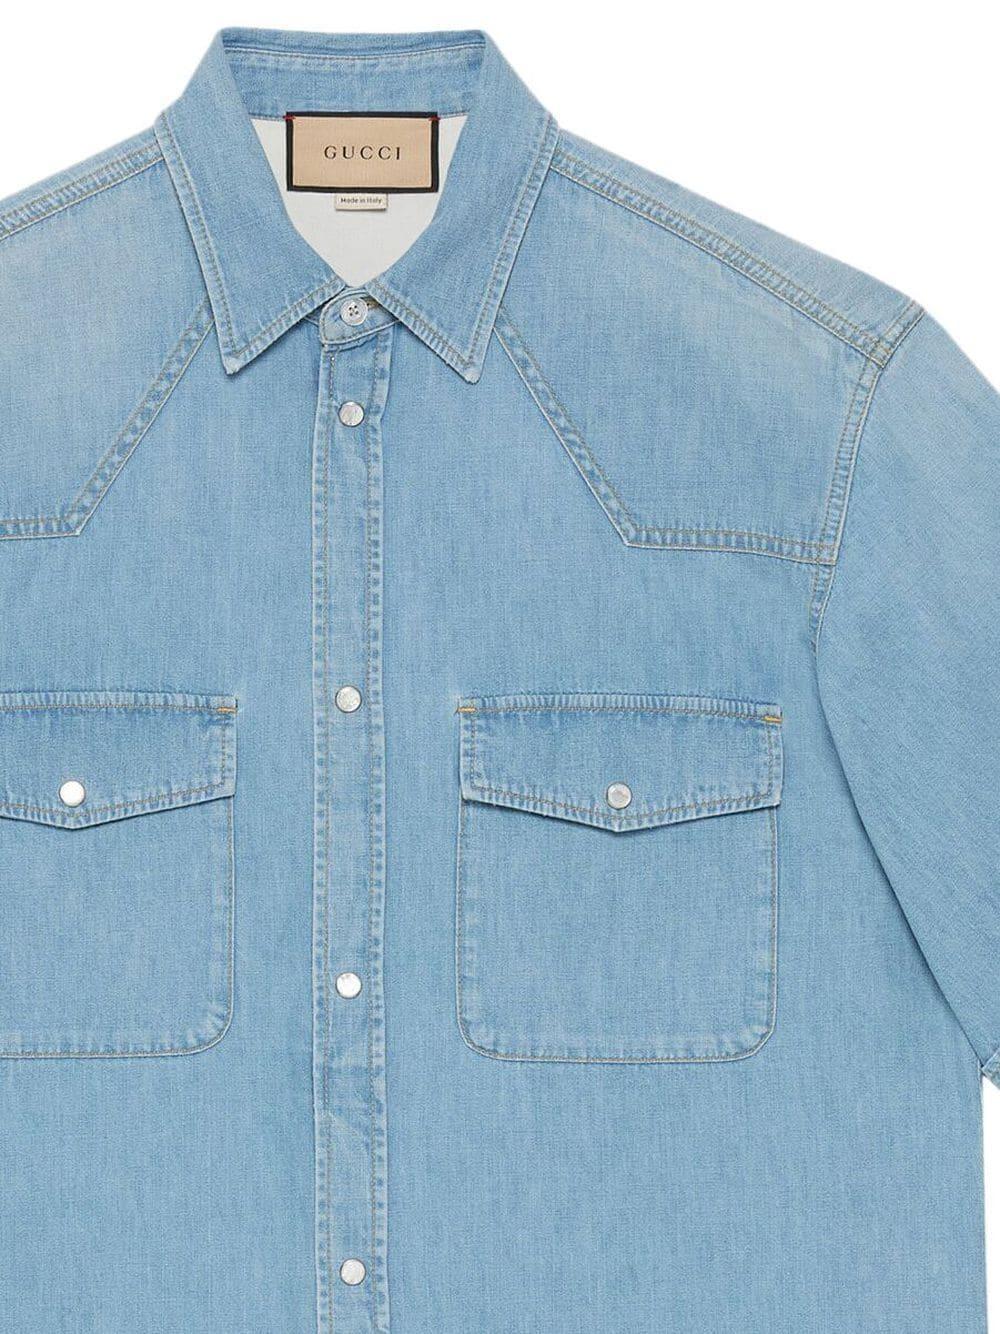 GUCCI Timeless Elegance: Classic Blue Denim Shirt for Men